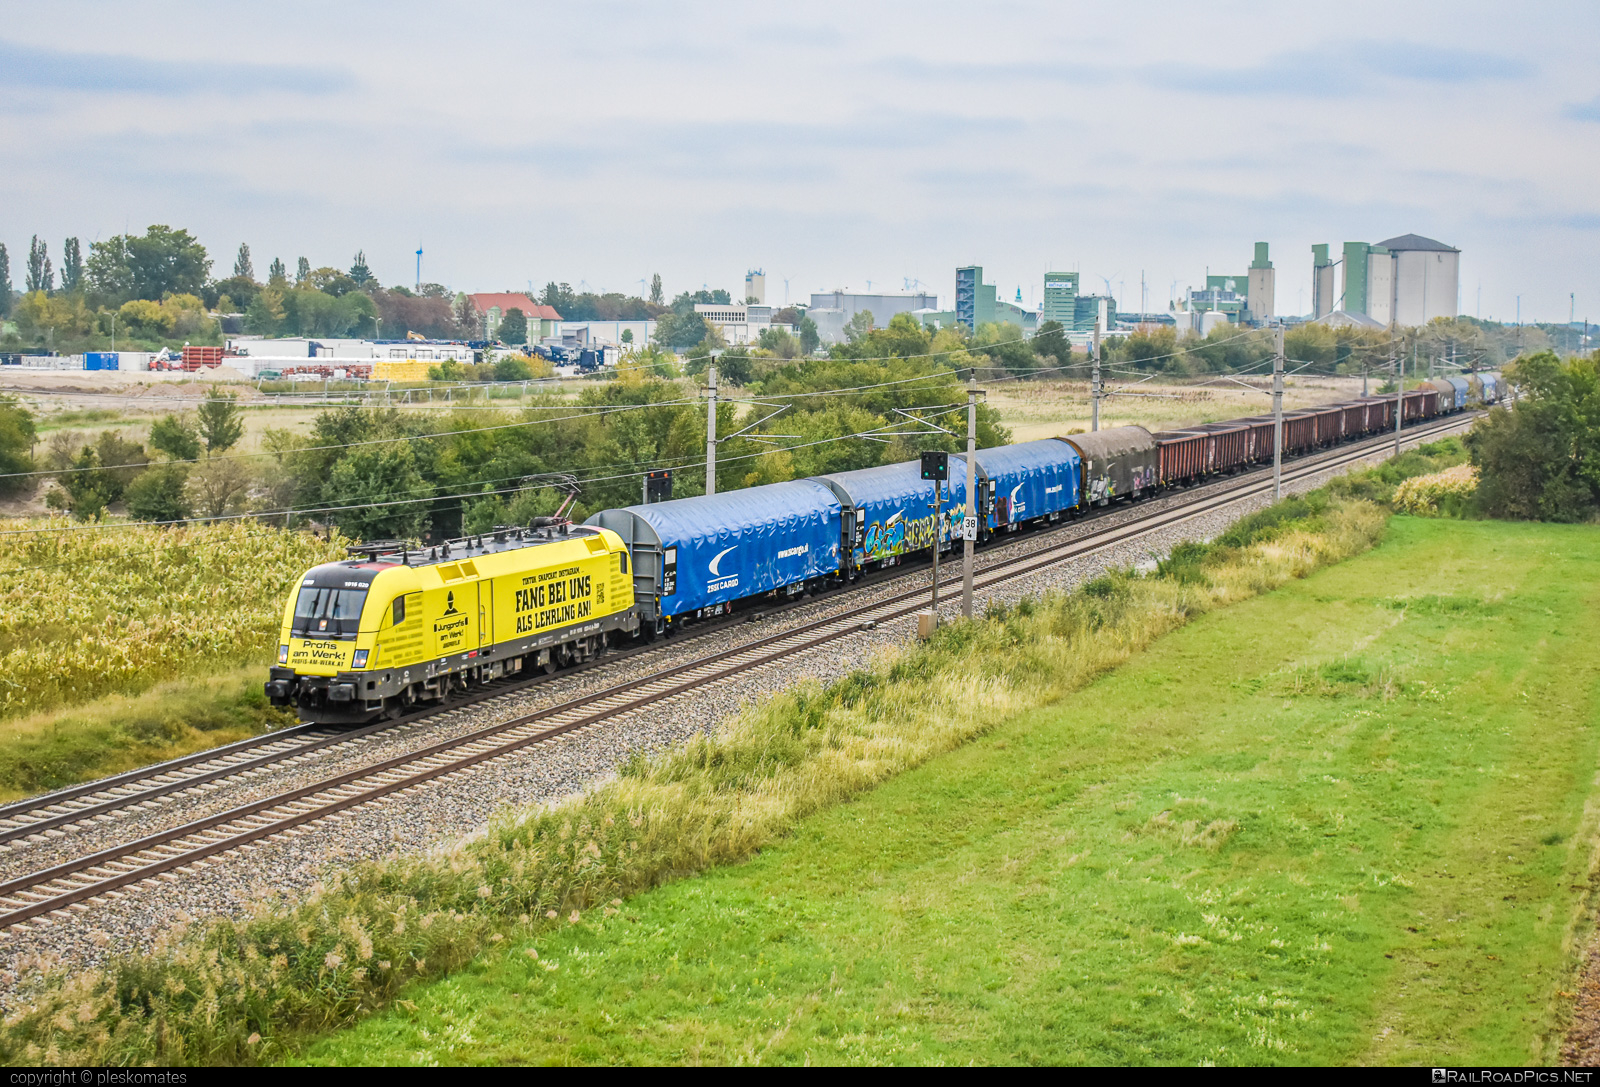 Siemens ES 64 U2 - 1016 020 operated by Rail Cargo Austria AG #es64 #es64u2 #eurosprinter #mixofcargo #obb #osterreichischebundesbahnen #rcw #siemens #siemensEs64 #siemensEs64u2 #siemenstaurus #taurus #tauruslocomotive